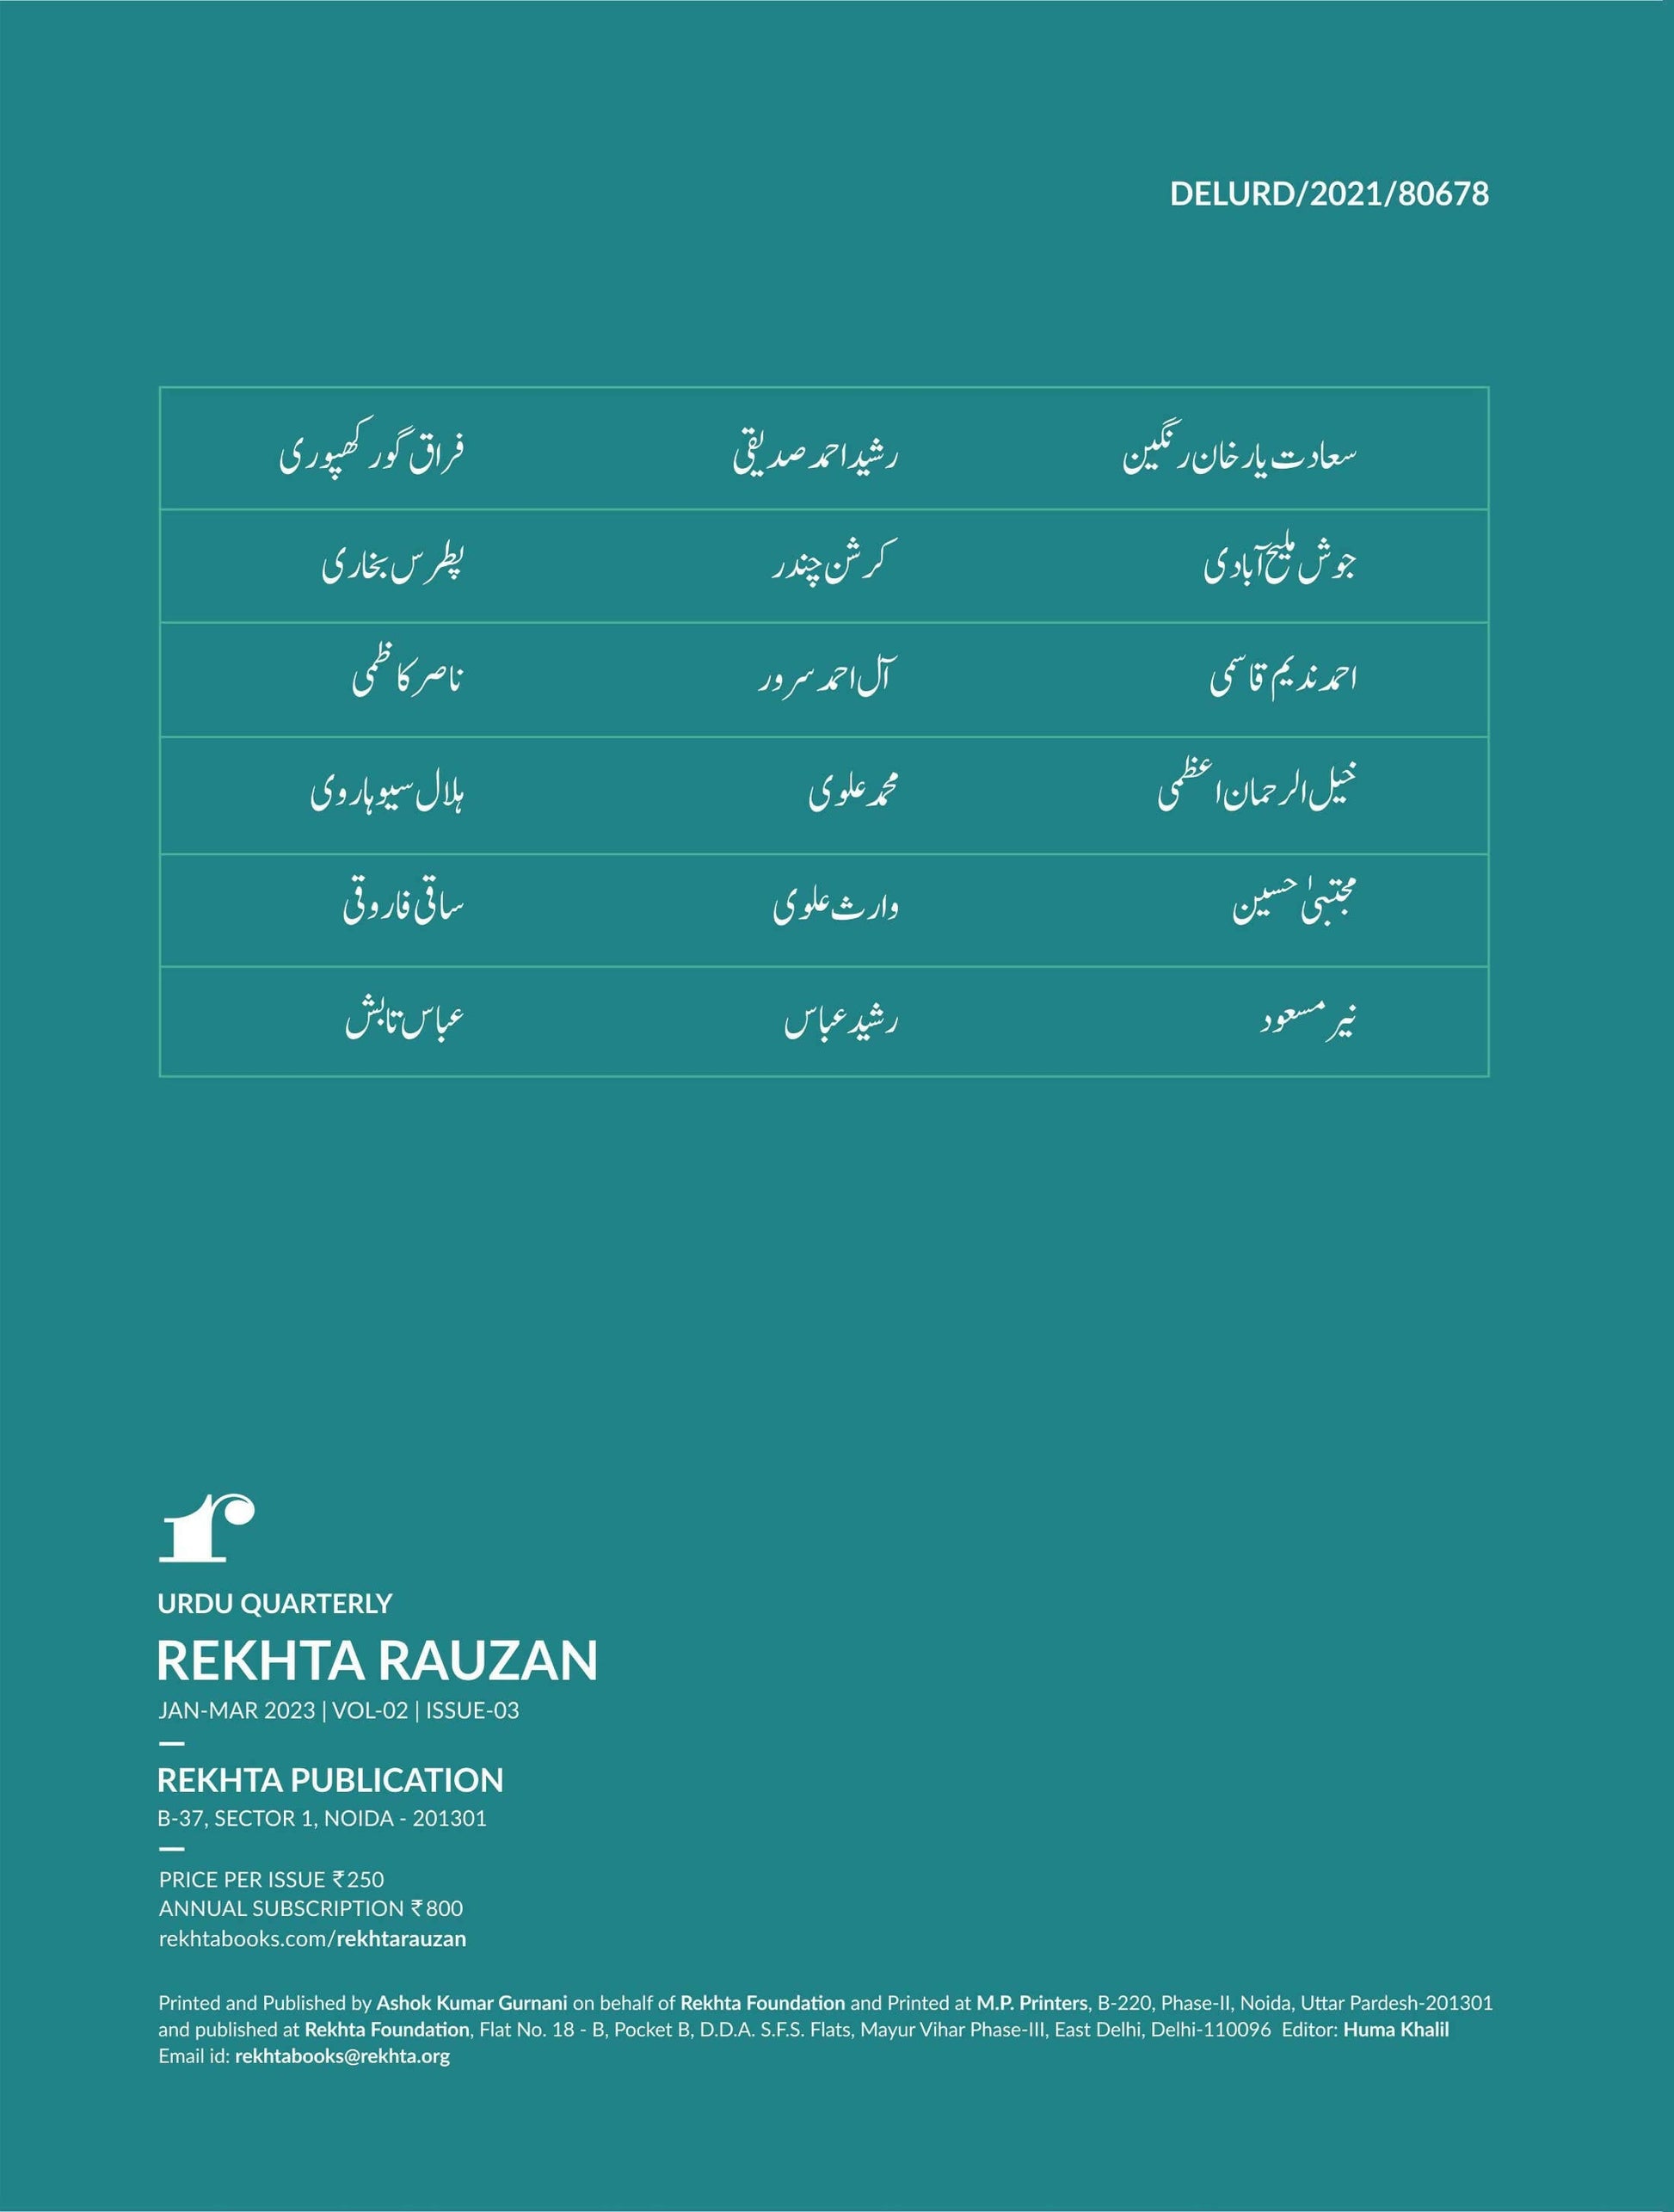 Rekhta Rauzan 7th Ed, Urdu